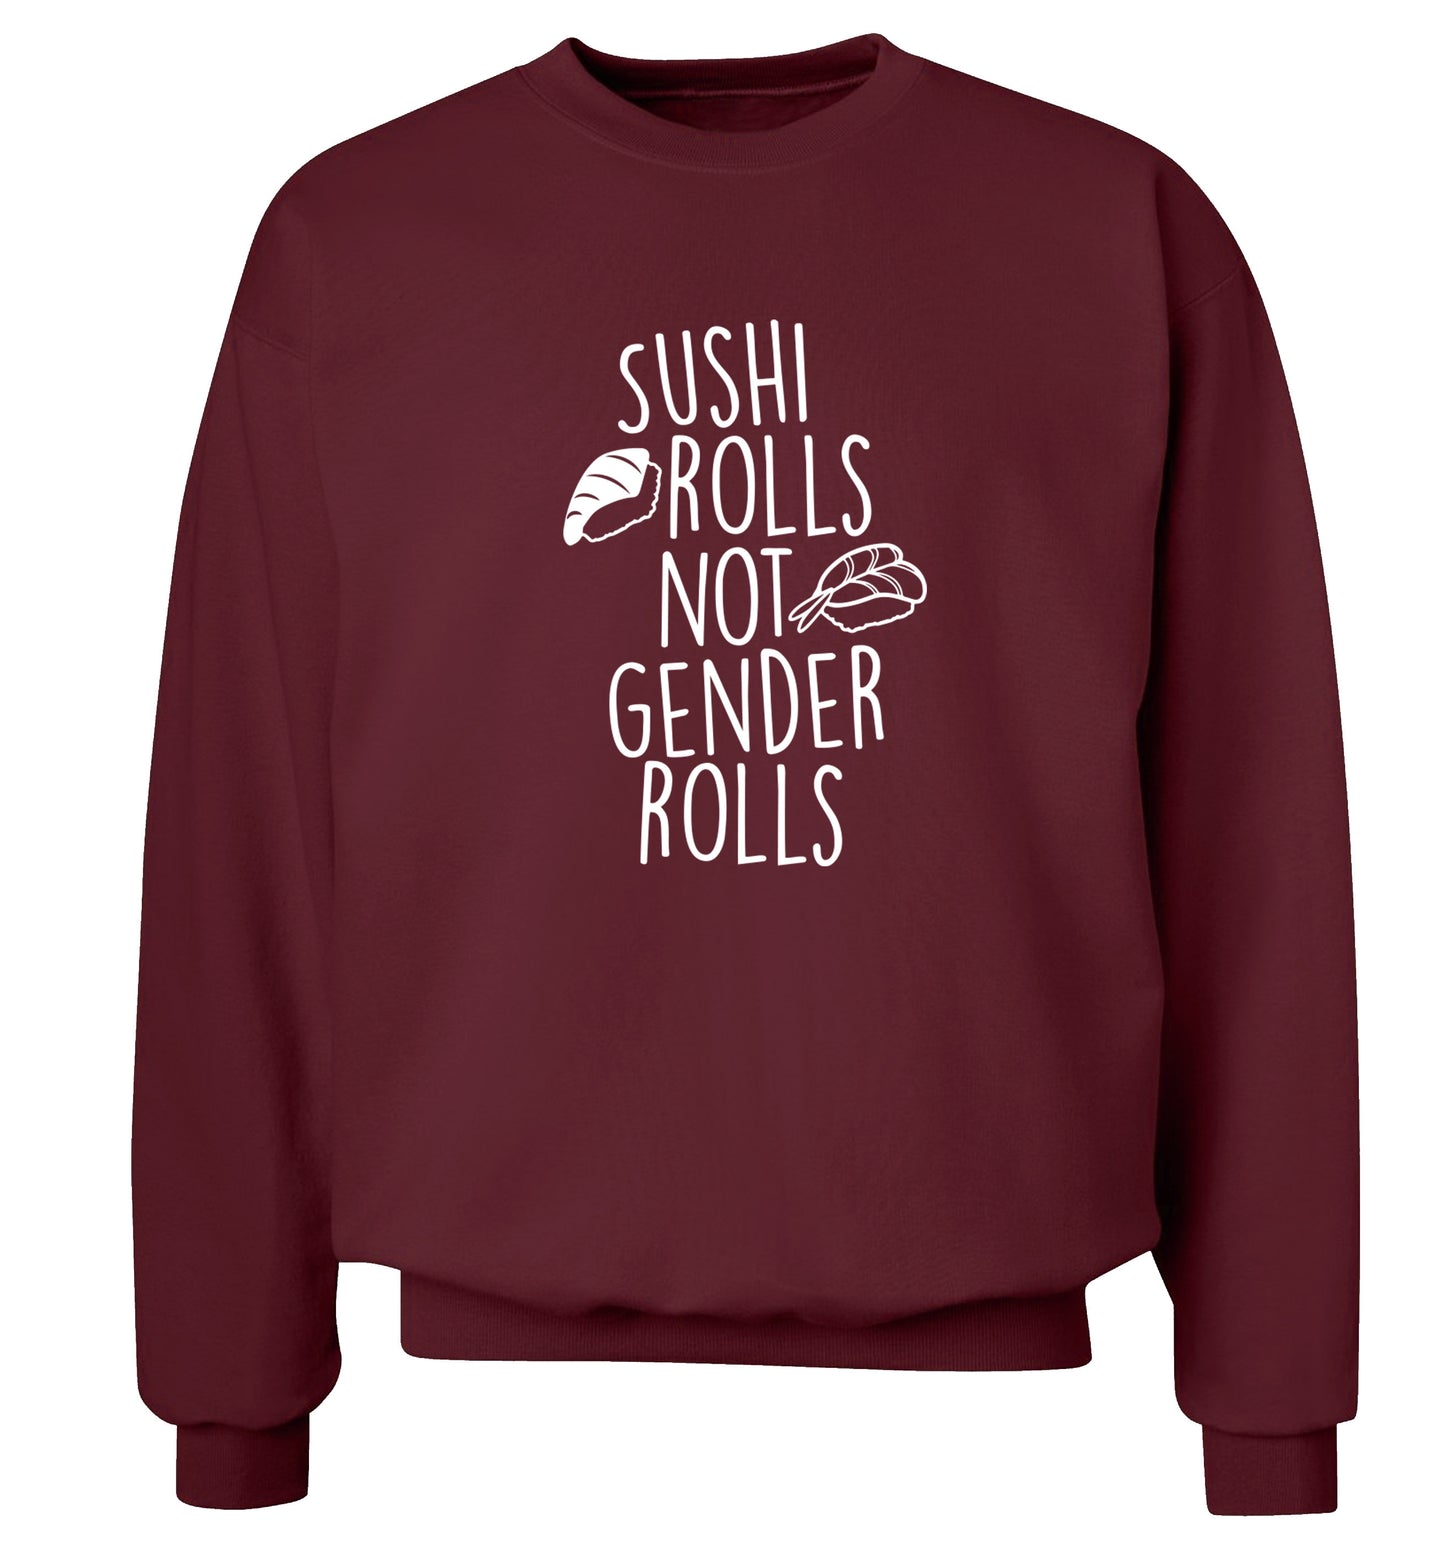 Sushi rolls not gender rolls Adult's unisex maroon Sweater 2XL